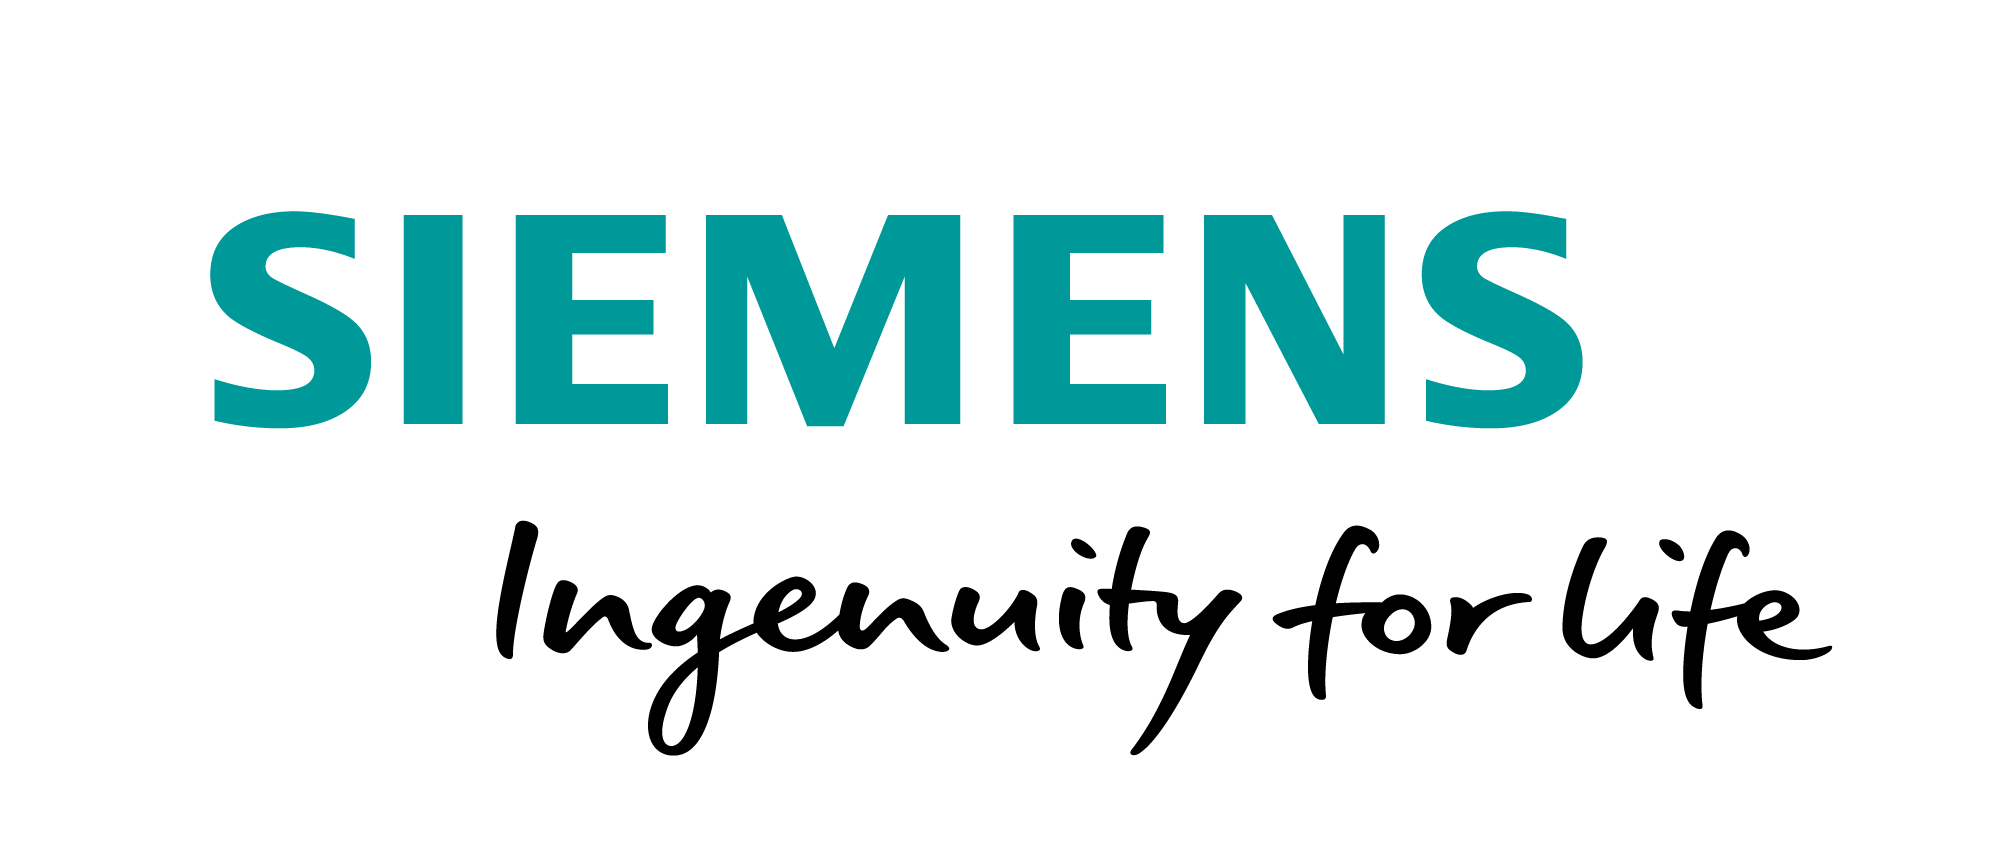 Siemens Smart Infrastructure Company Logo